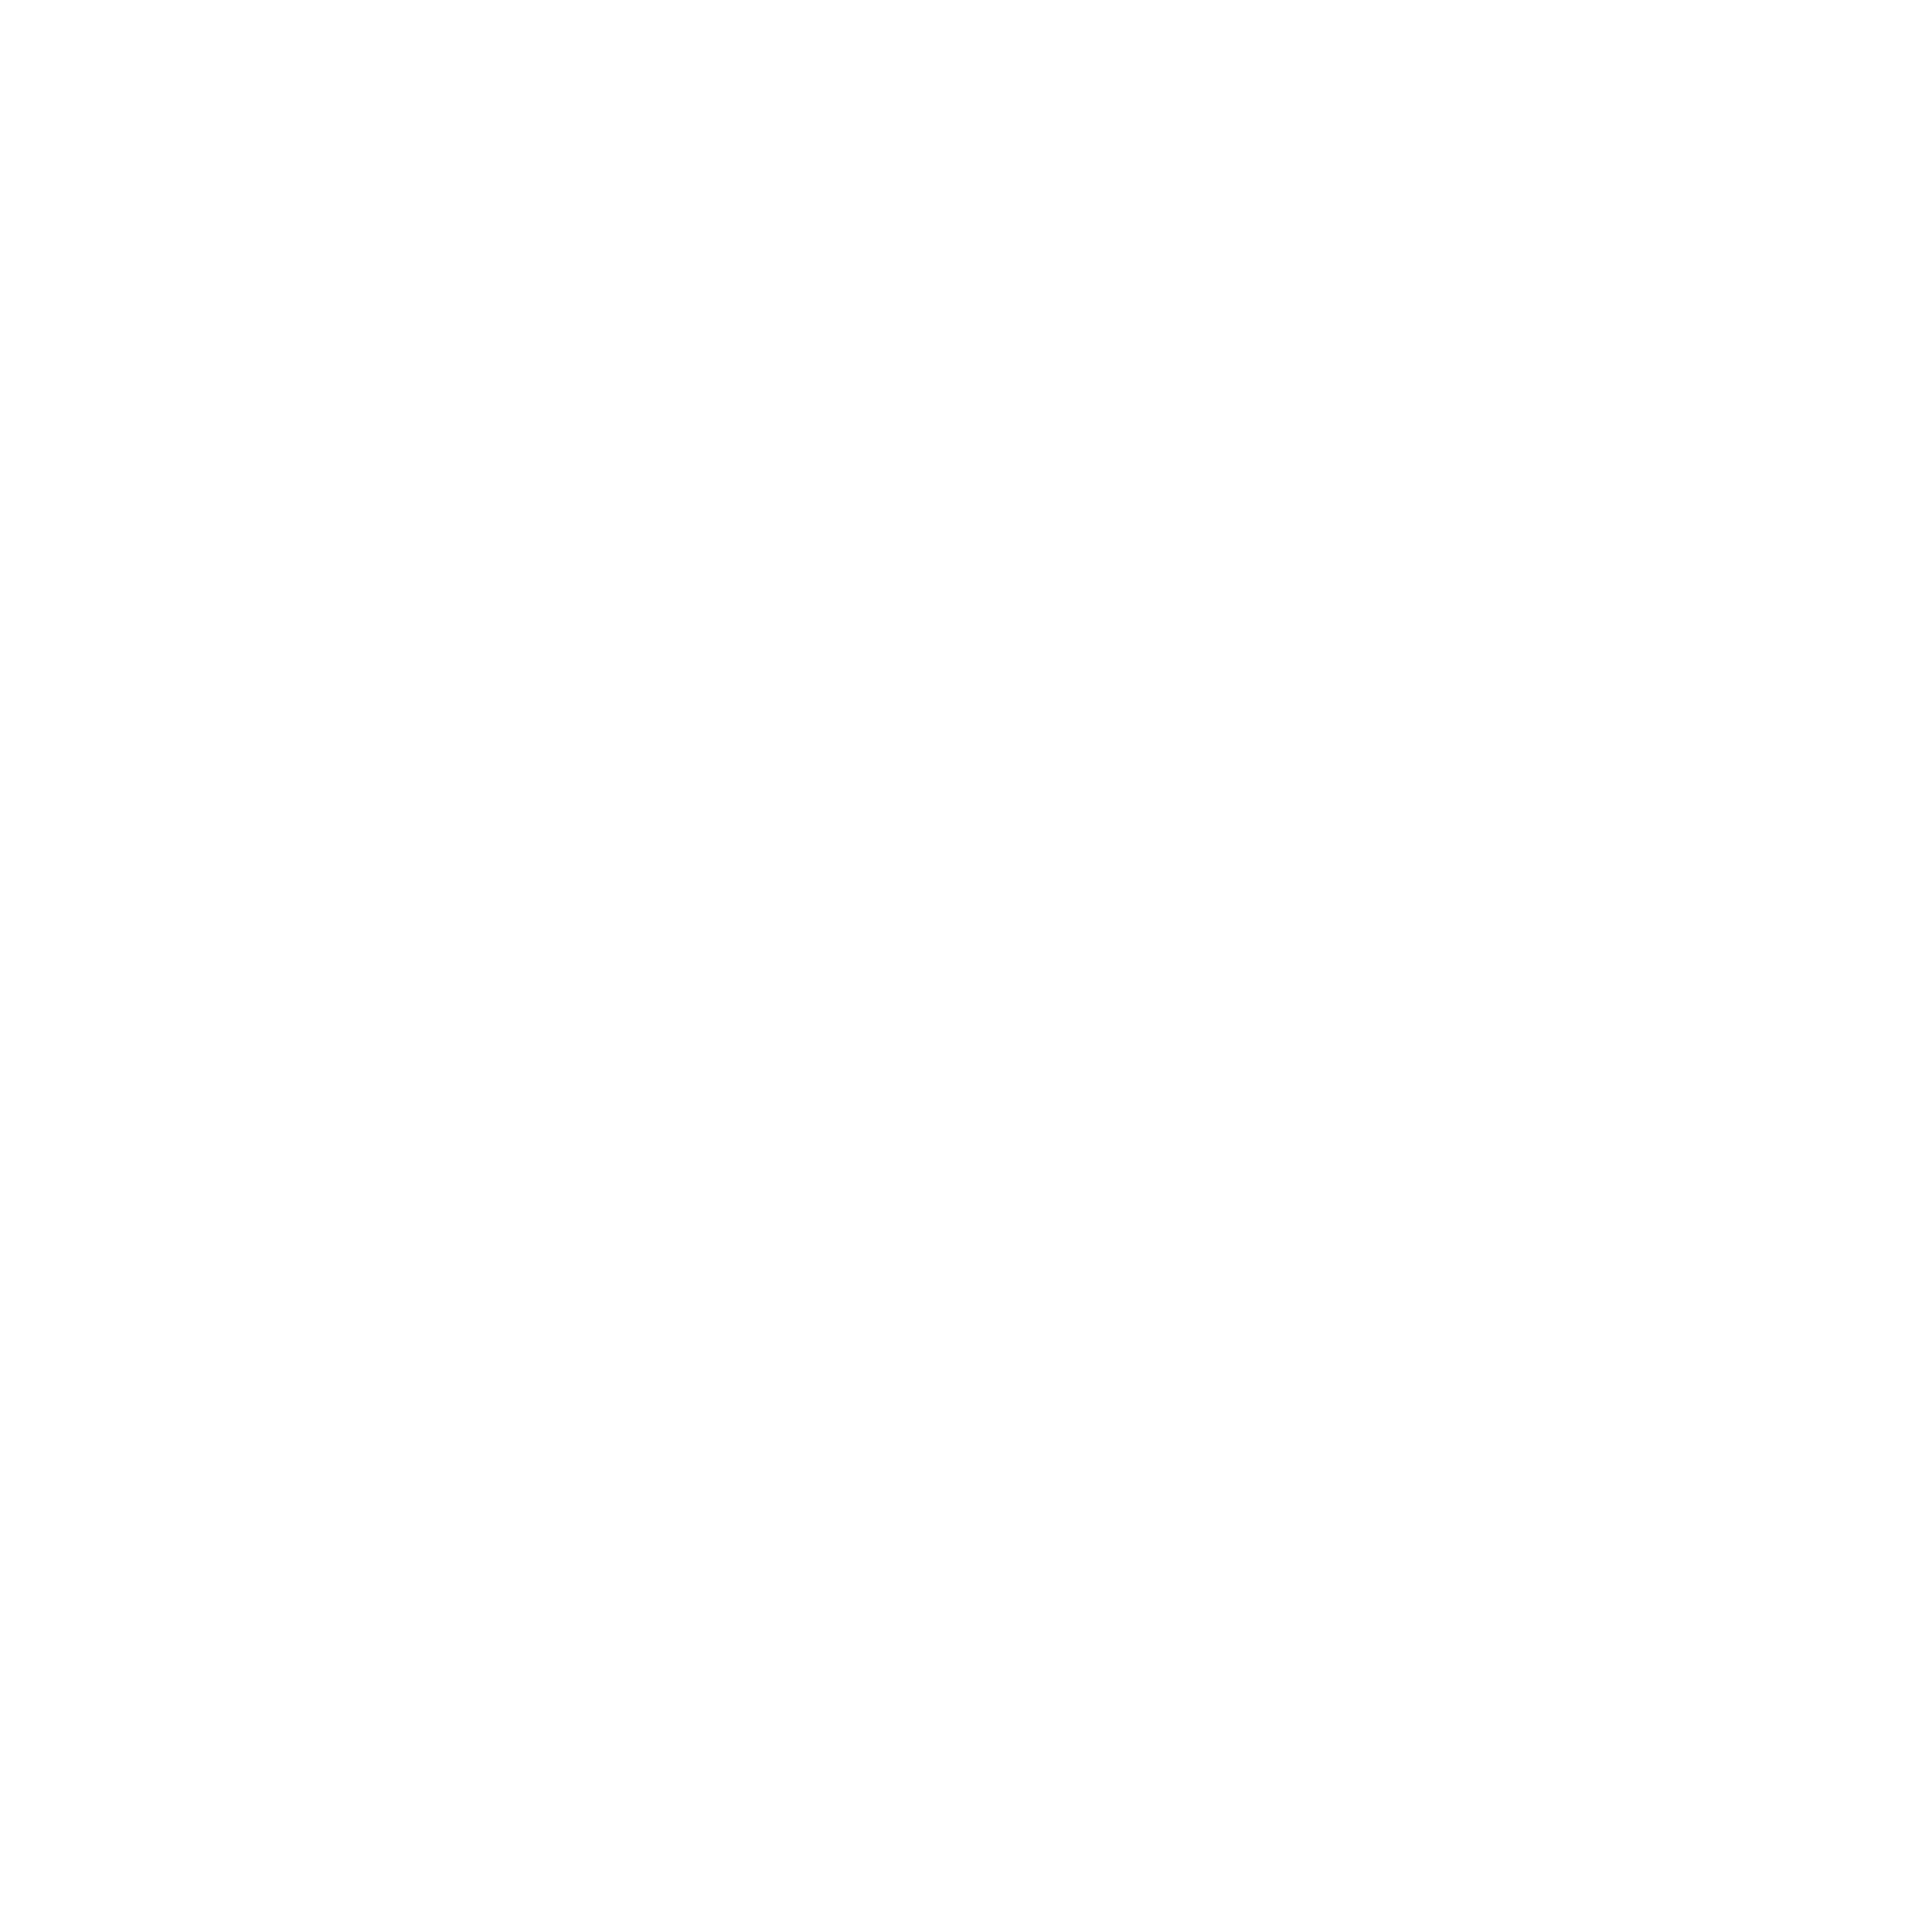 An icon of three stars